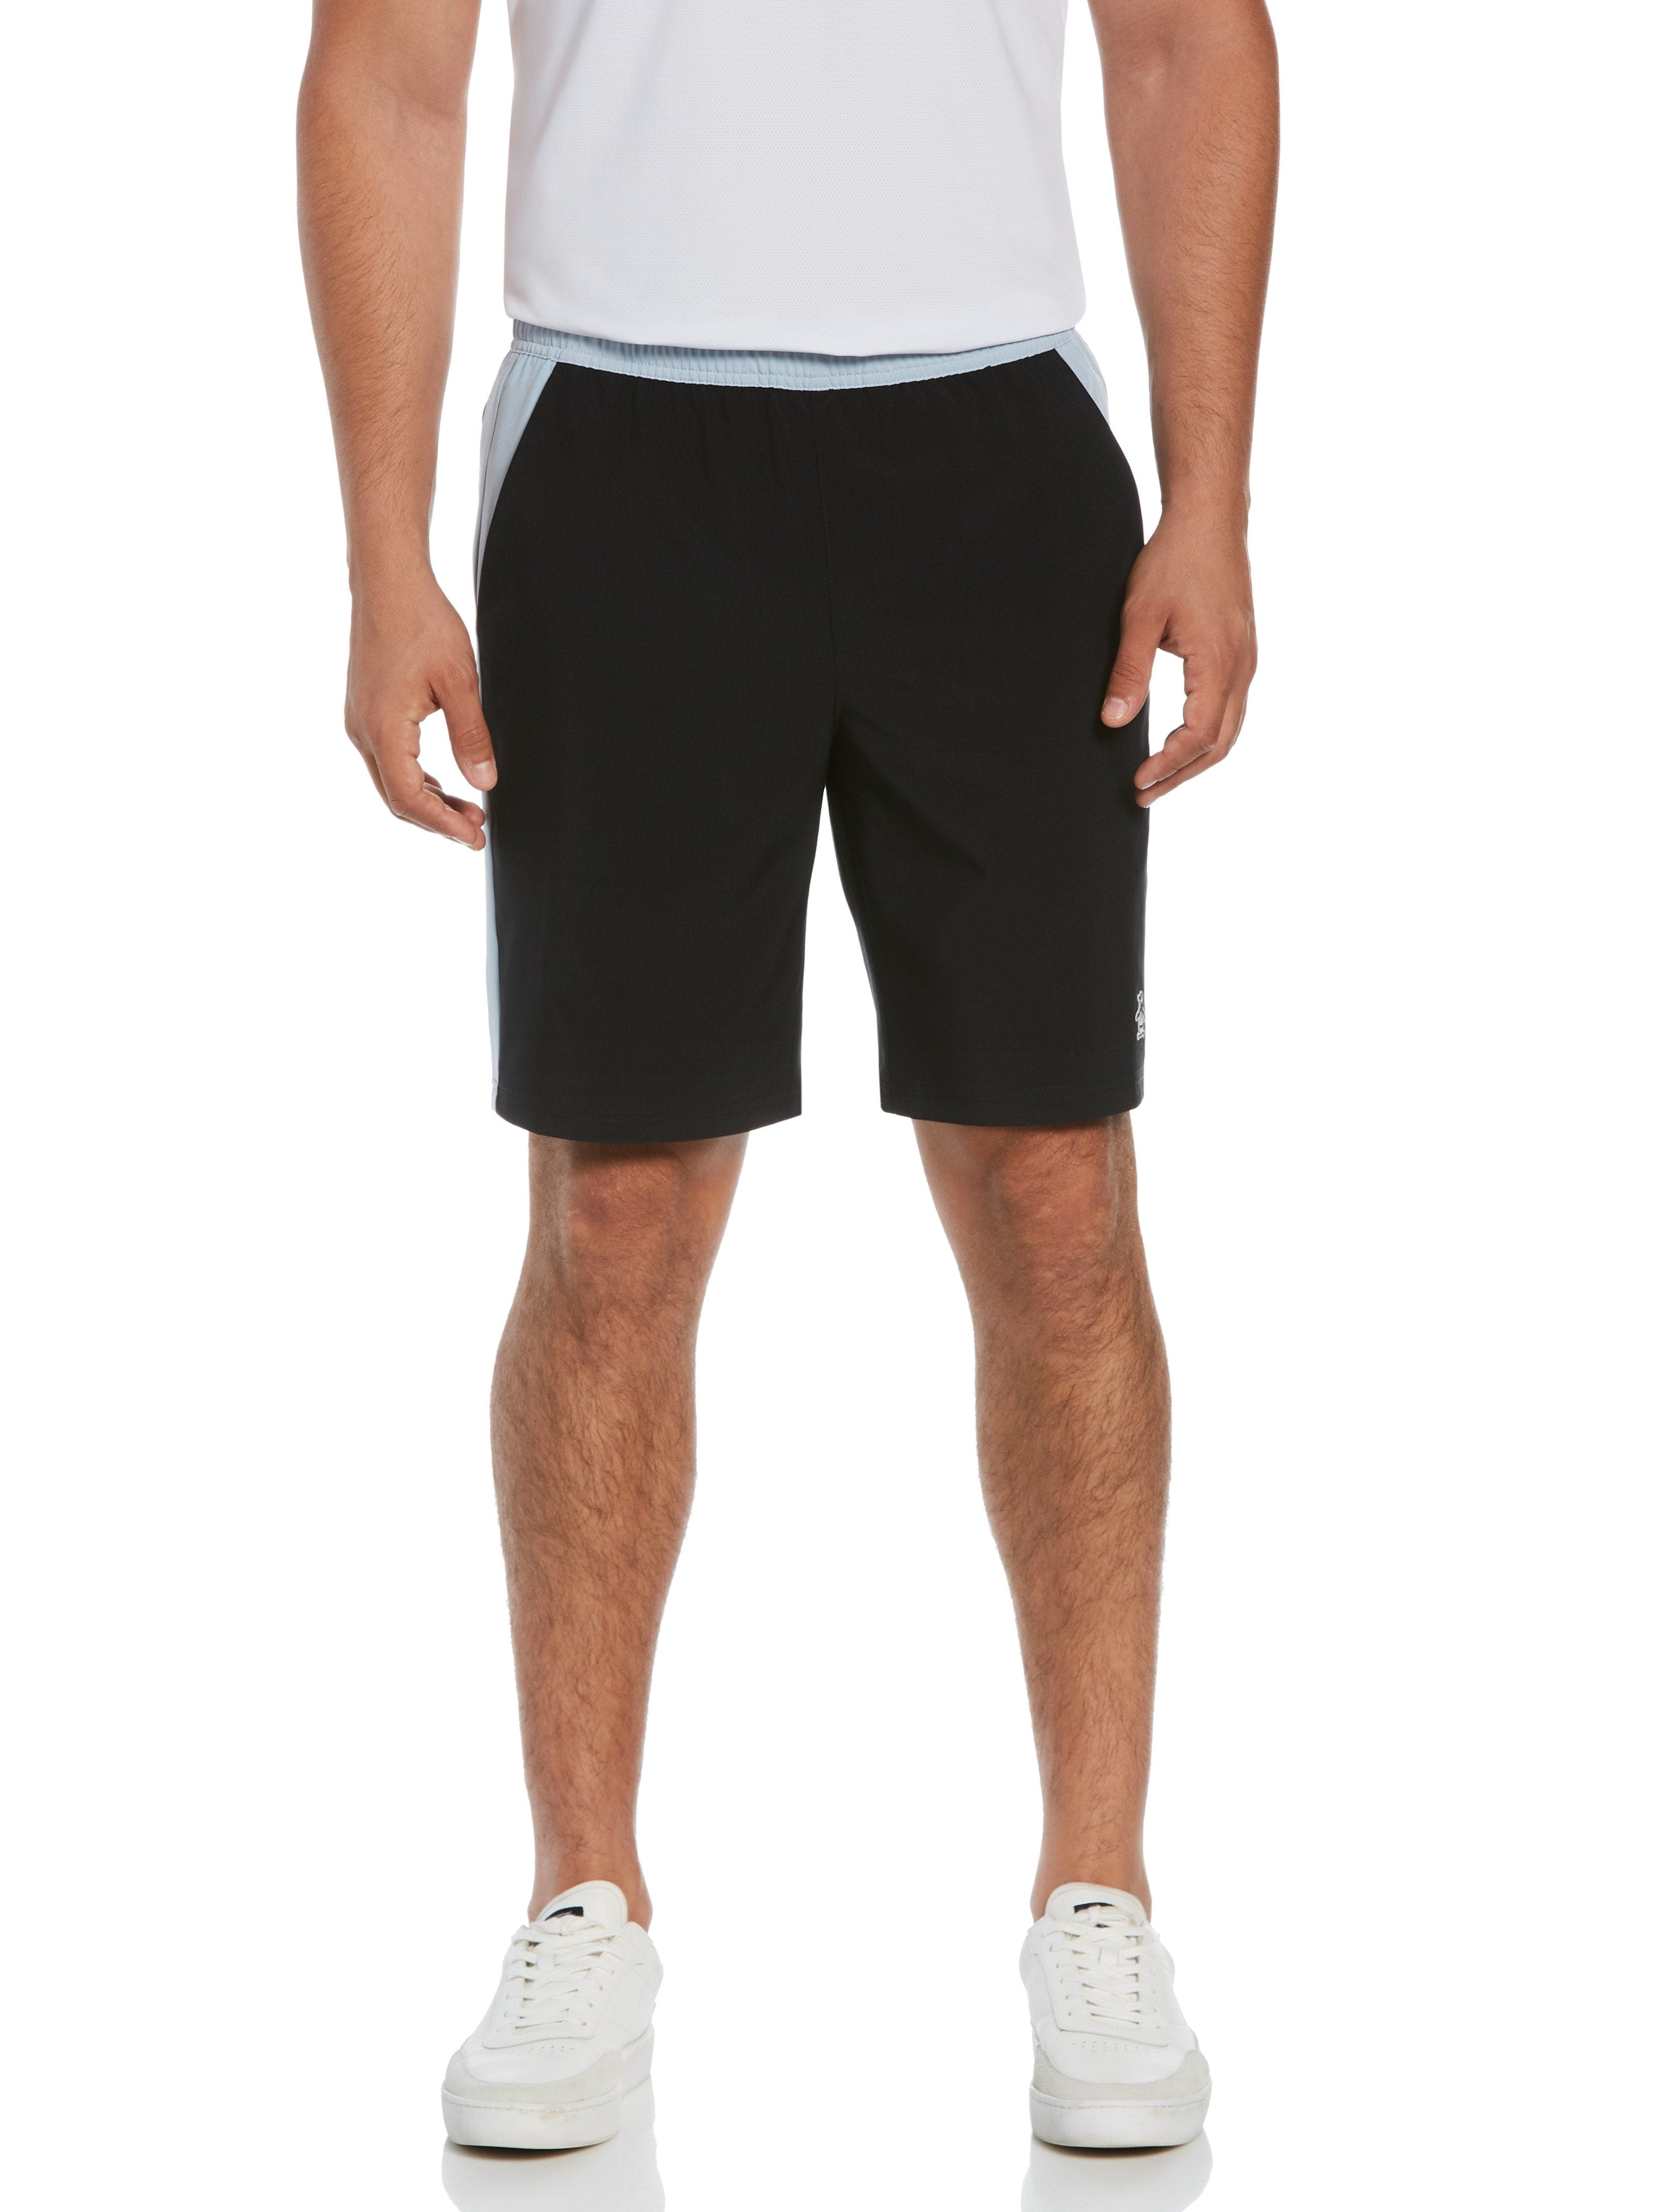 Original Penguin Mens 4-Way Stretch Color Block Shorts, Size 2XL, Black, Polyester/Spandex | Golf Apparel Shop